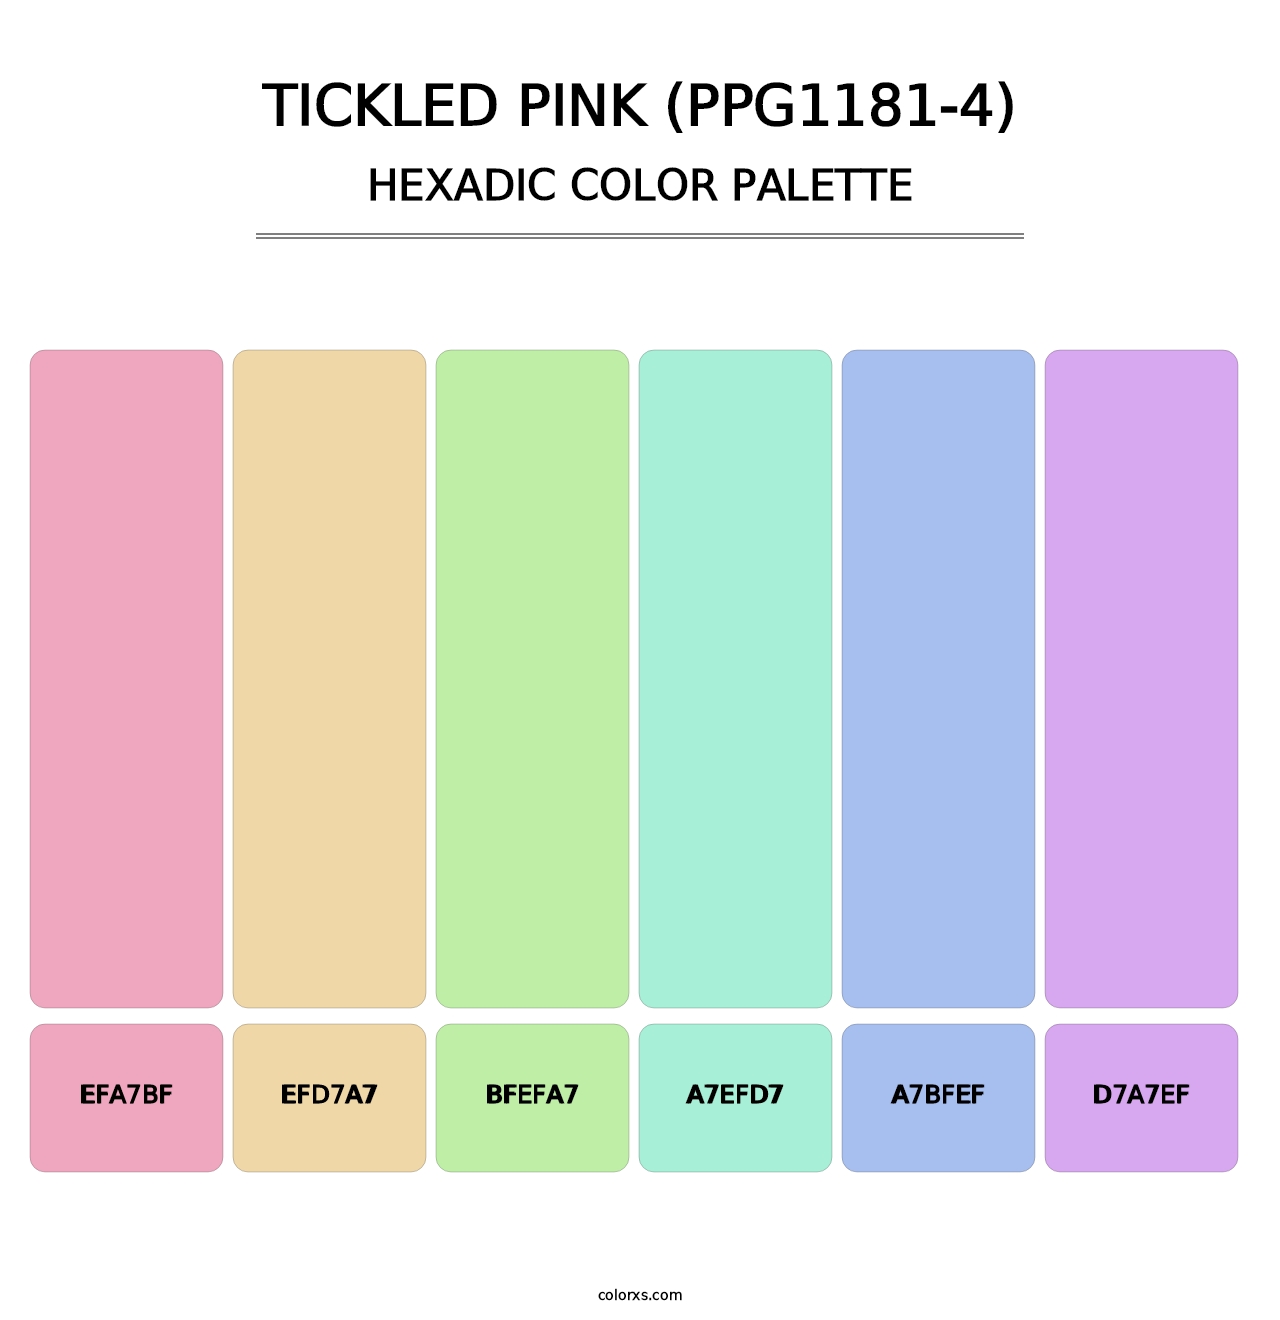 Tickled Pink (PPG1181-4) - Hexadic Color Palette